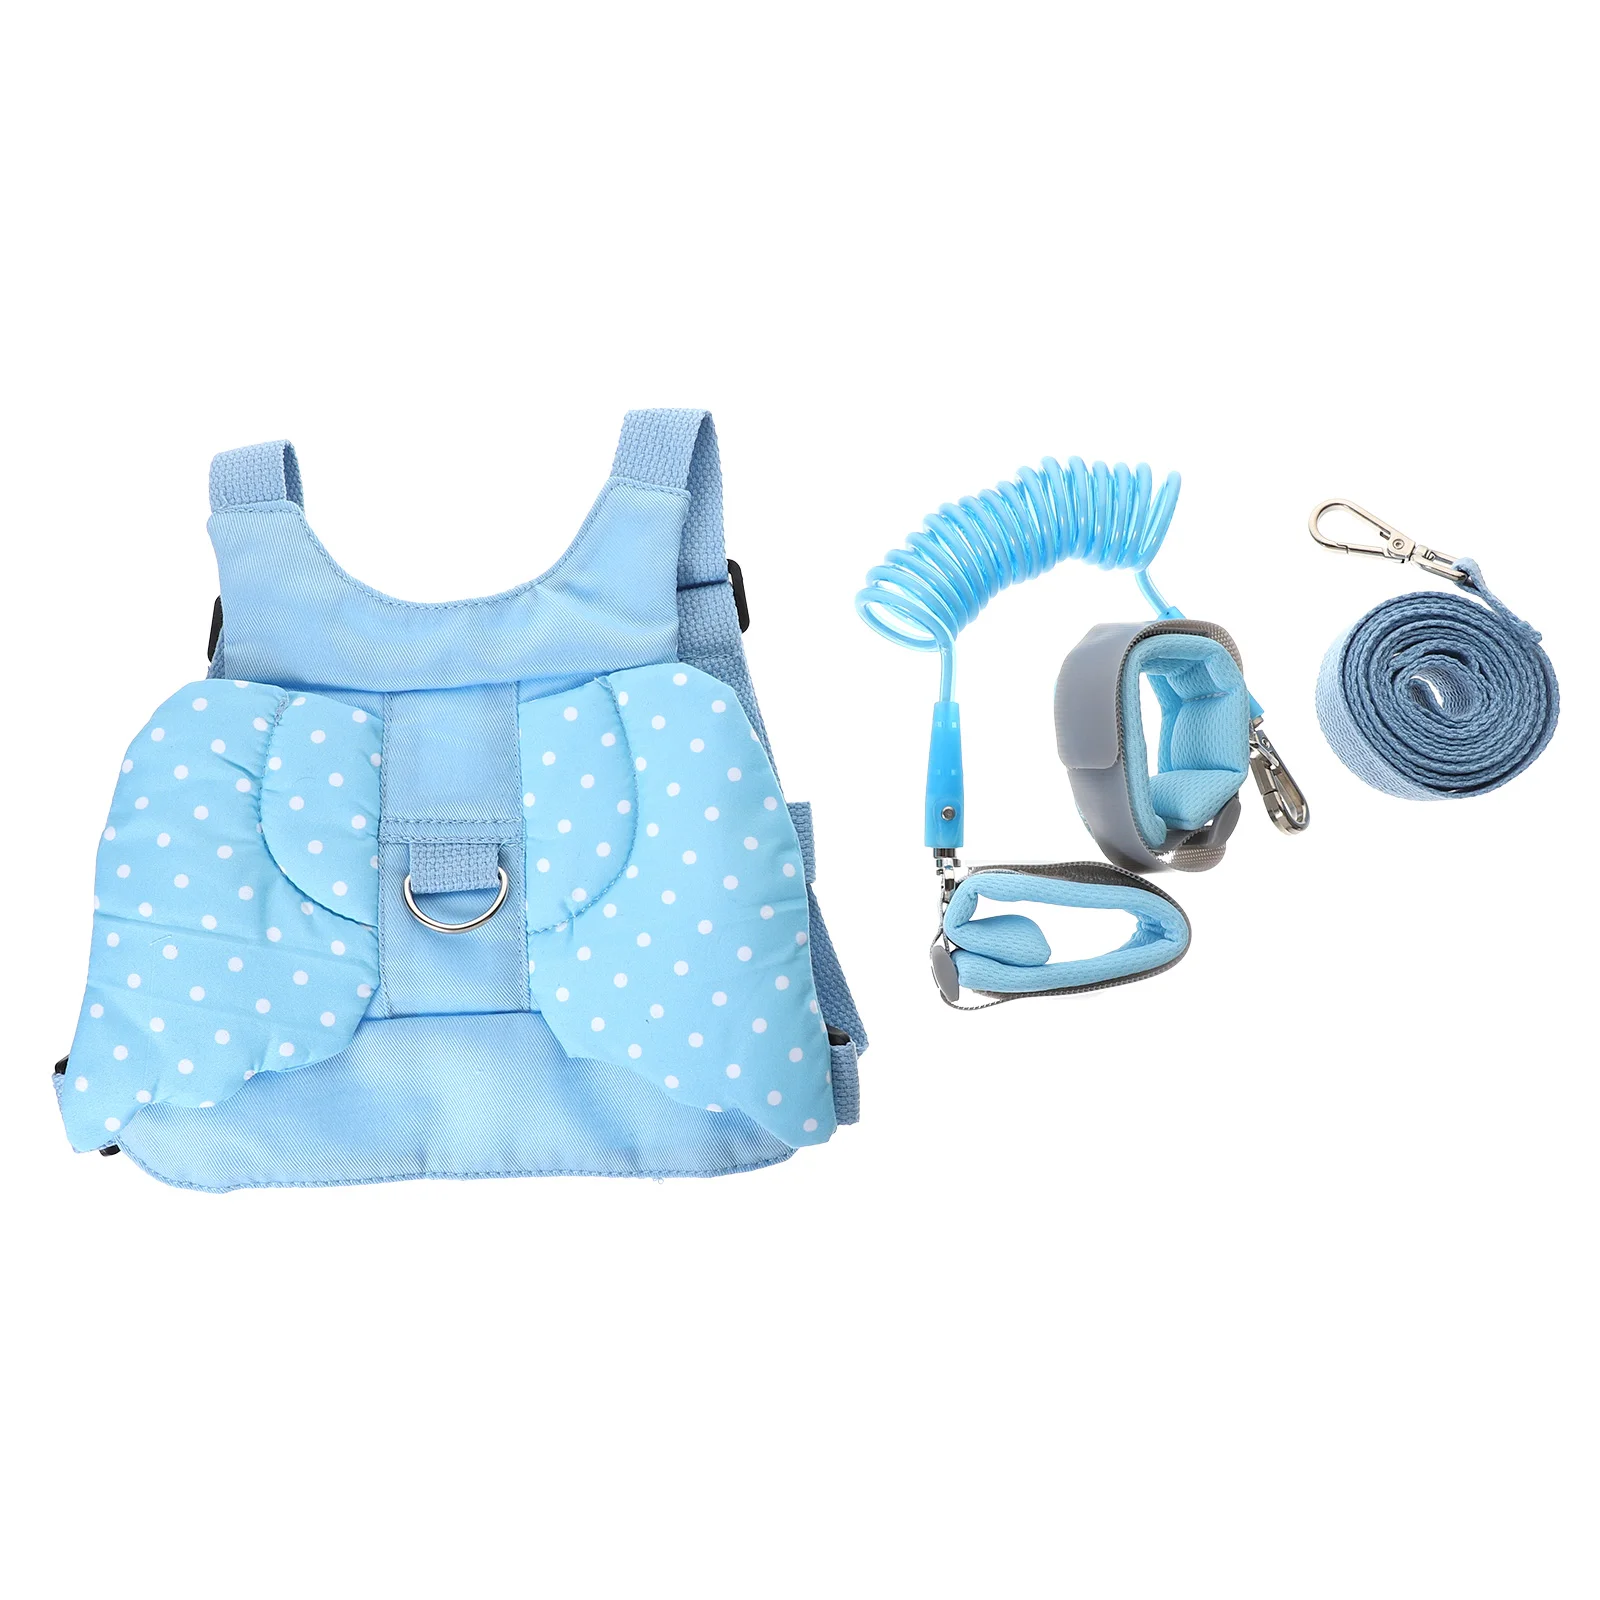 

Childrens Backpack Anti-lost Vest Children Baby Walking Harness Leash 20.5X18X1.5CM Safety Wrist Link Set Blue